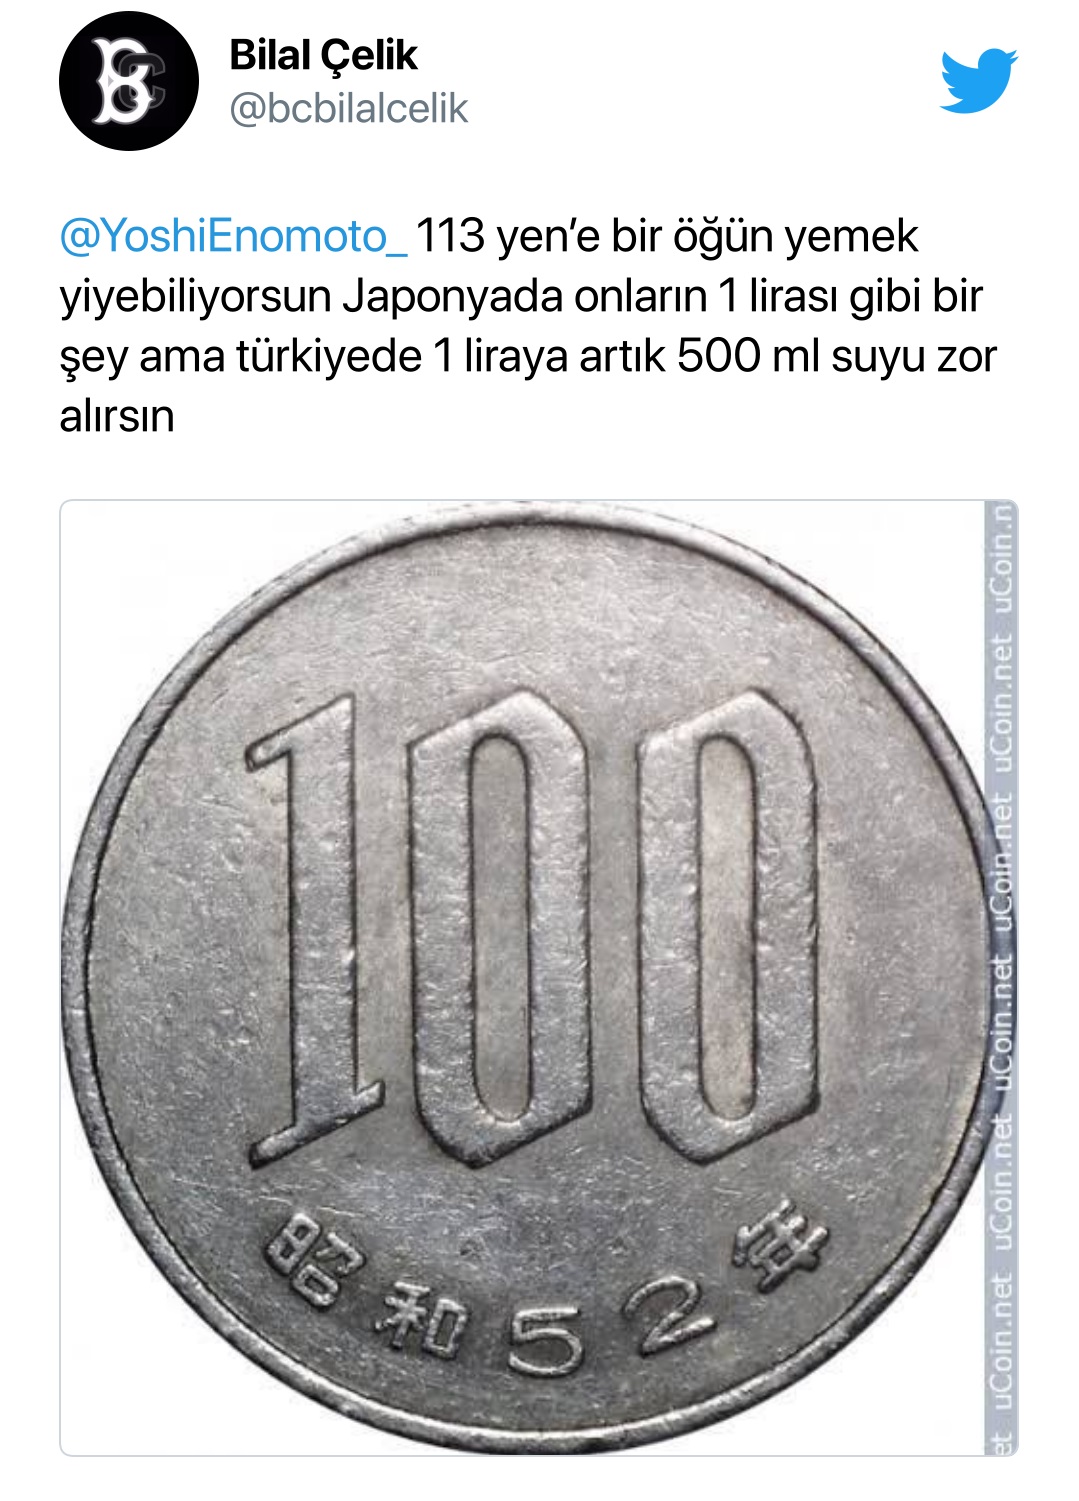 1 yen kaç Türk TL'si?